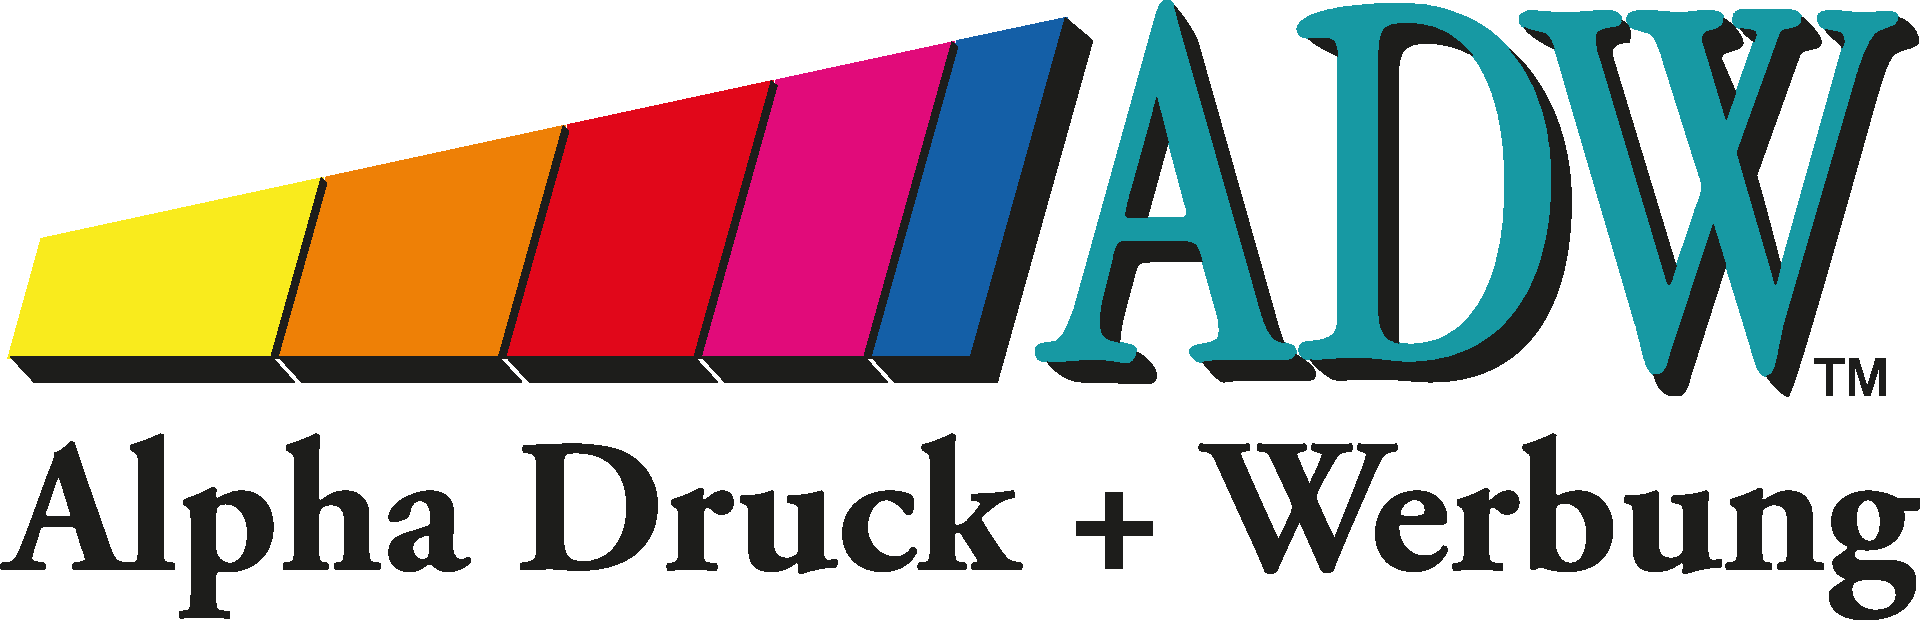 Alpha Druck + Werbung Elmshorn Logo 02